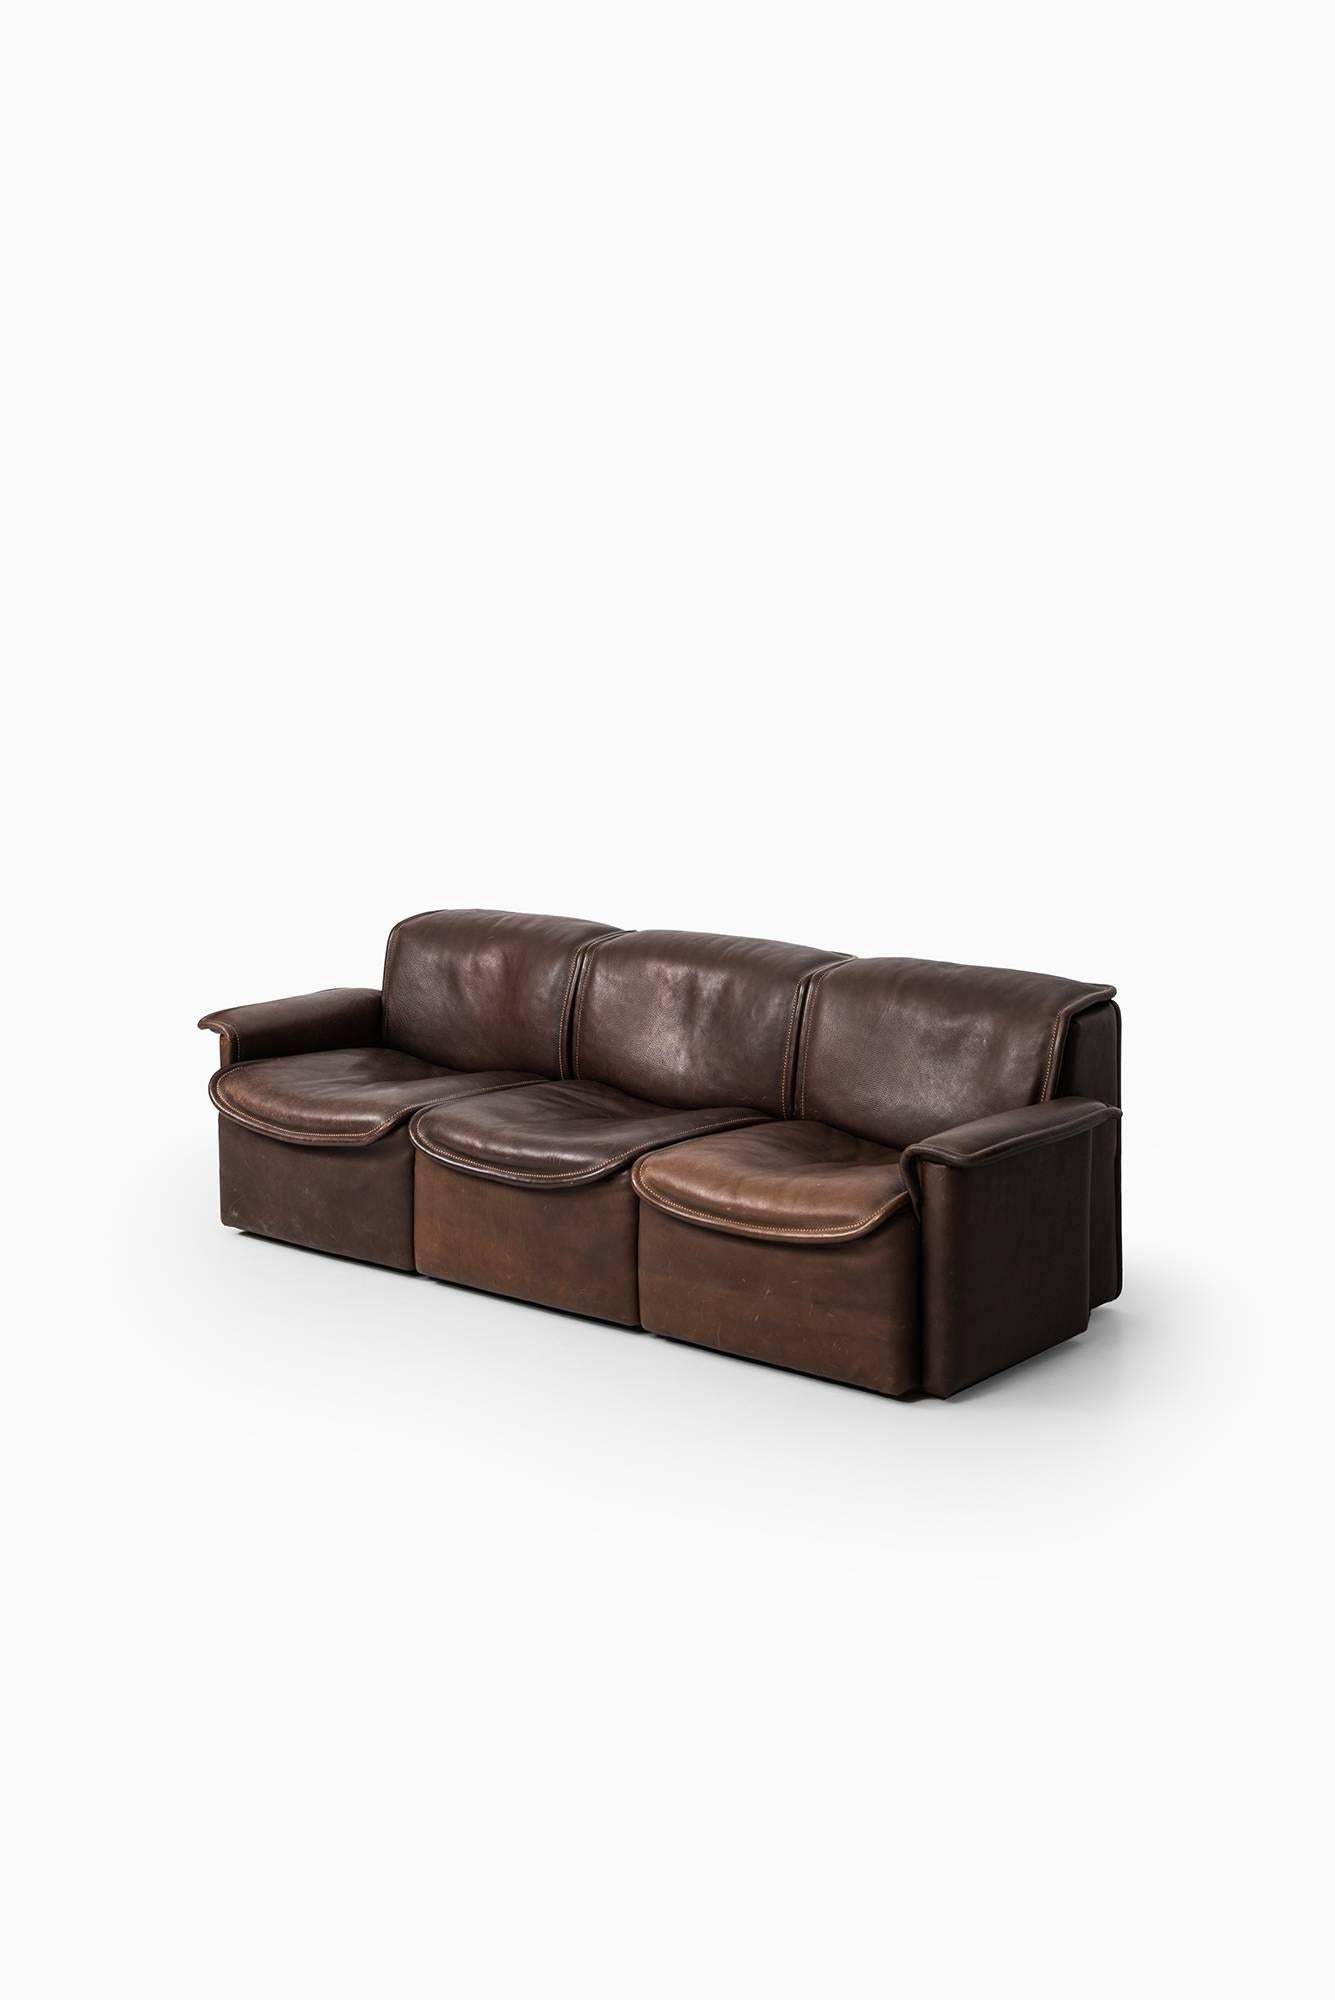 Leather De Sede Three-Seat Sofa Model DS-12 by De Sede in Switzerland